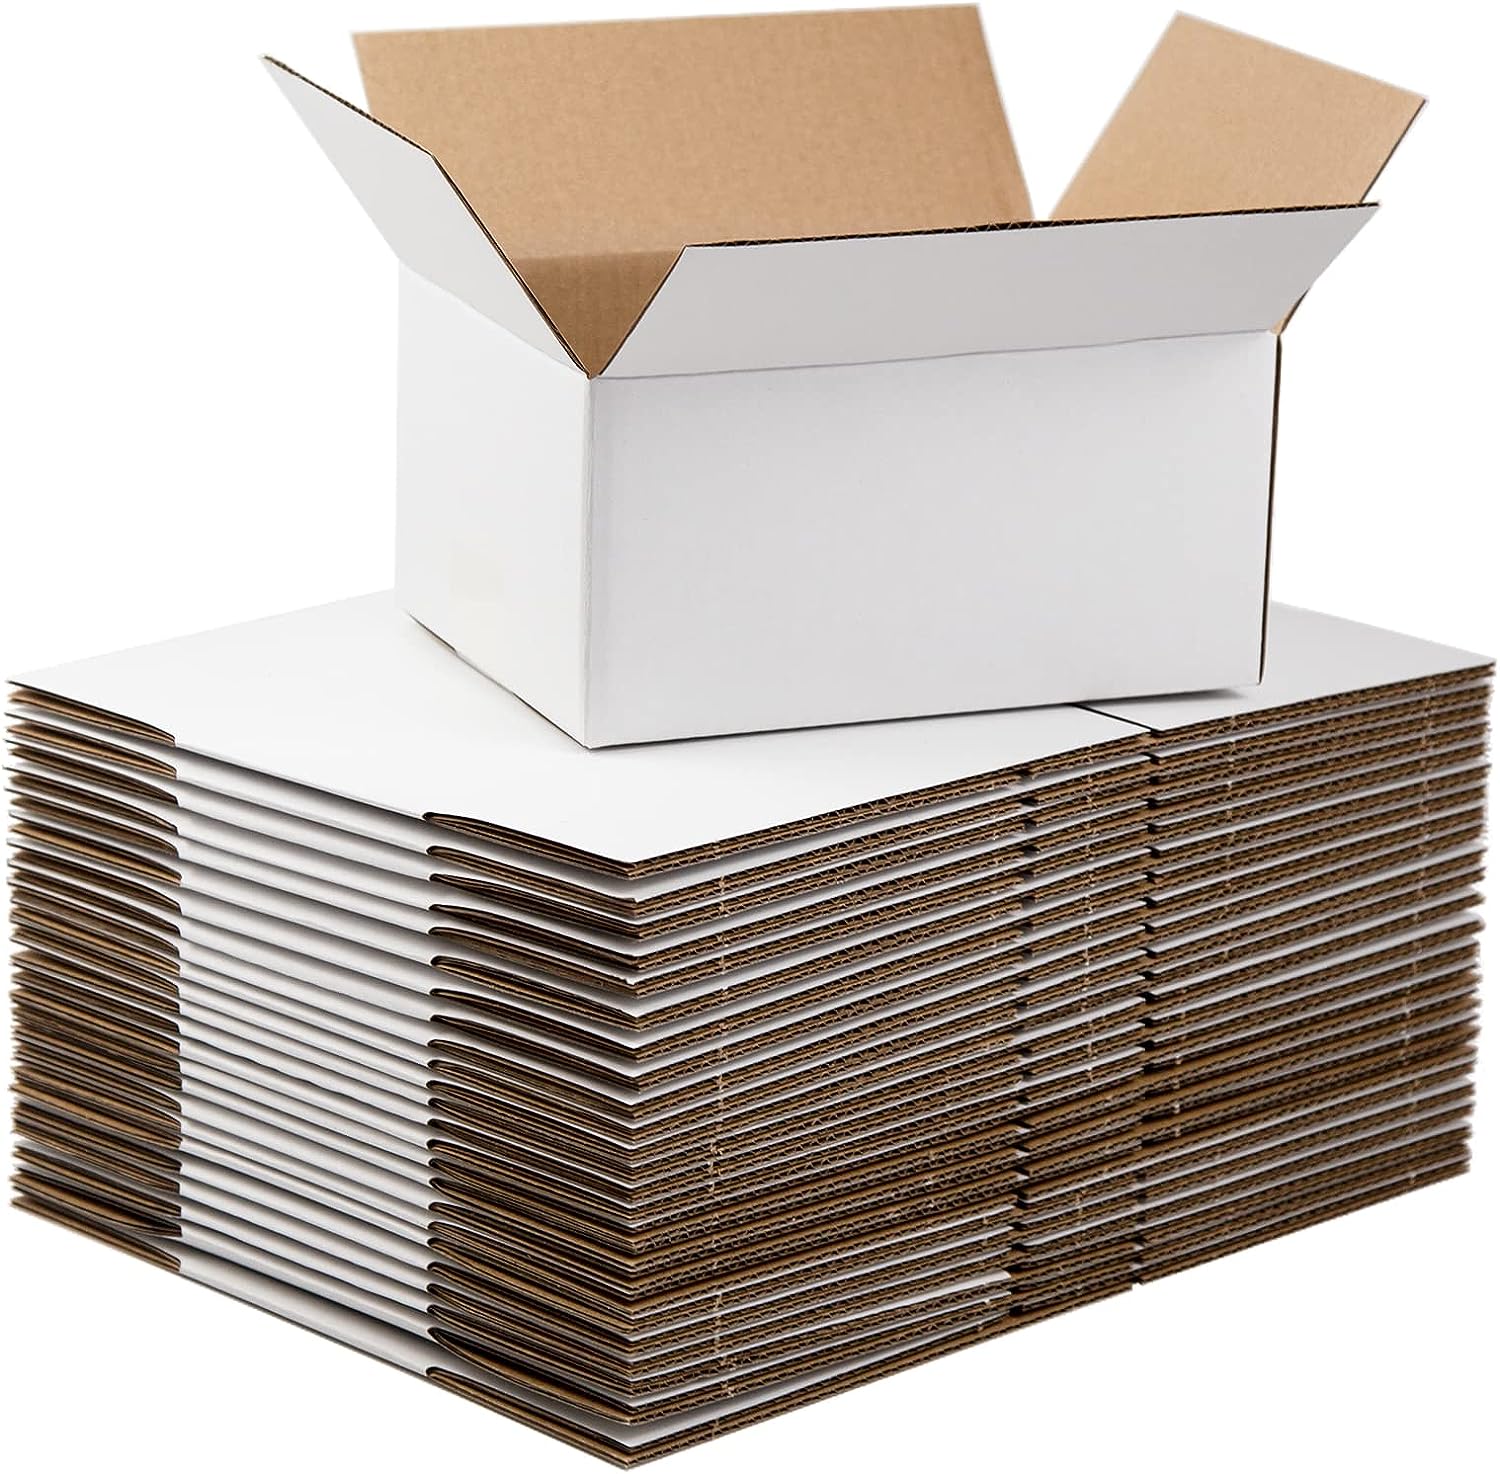 Louis Vuitton Large Empty Shipping Box 17” x 13.75 x 6.75”